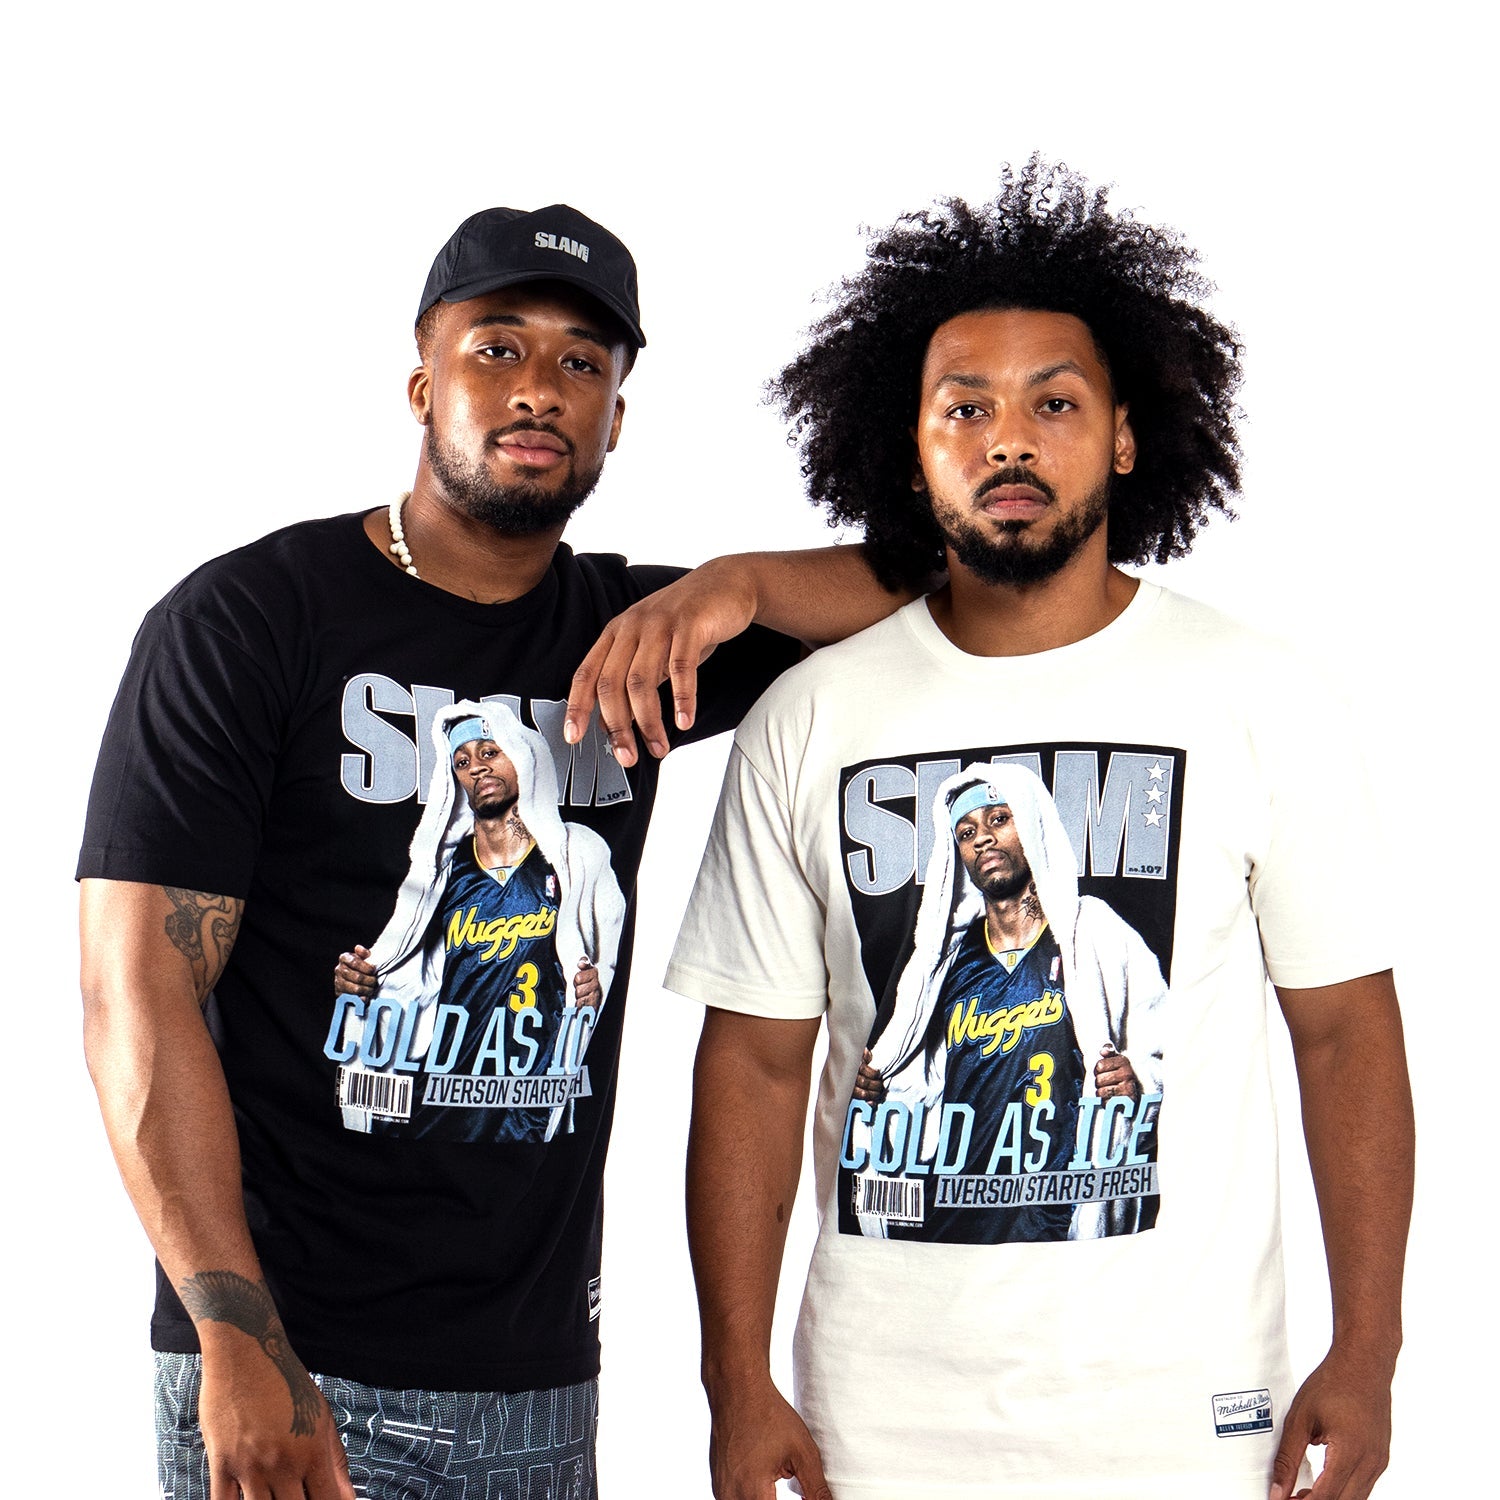 Mitchell & Ness Allen Iverson Philadelphia 76ers Black Slam Cover Graphic T-Shirt Size: Medium